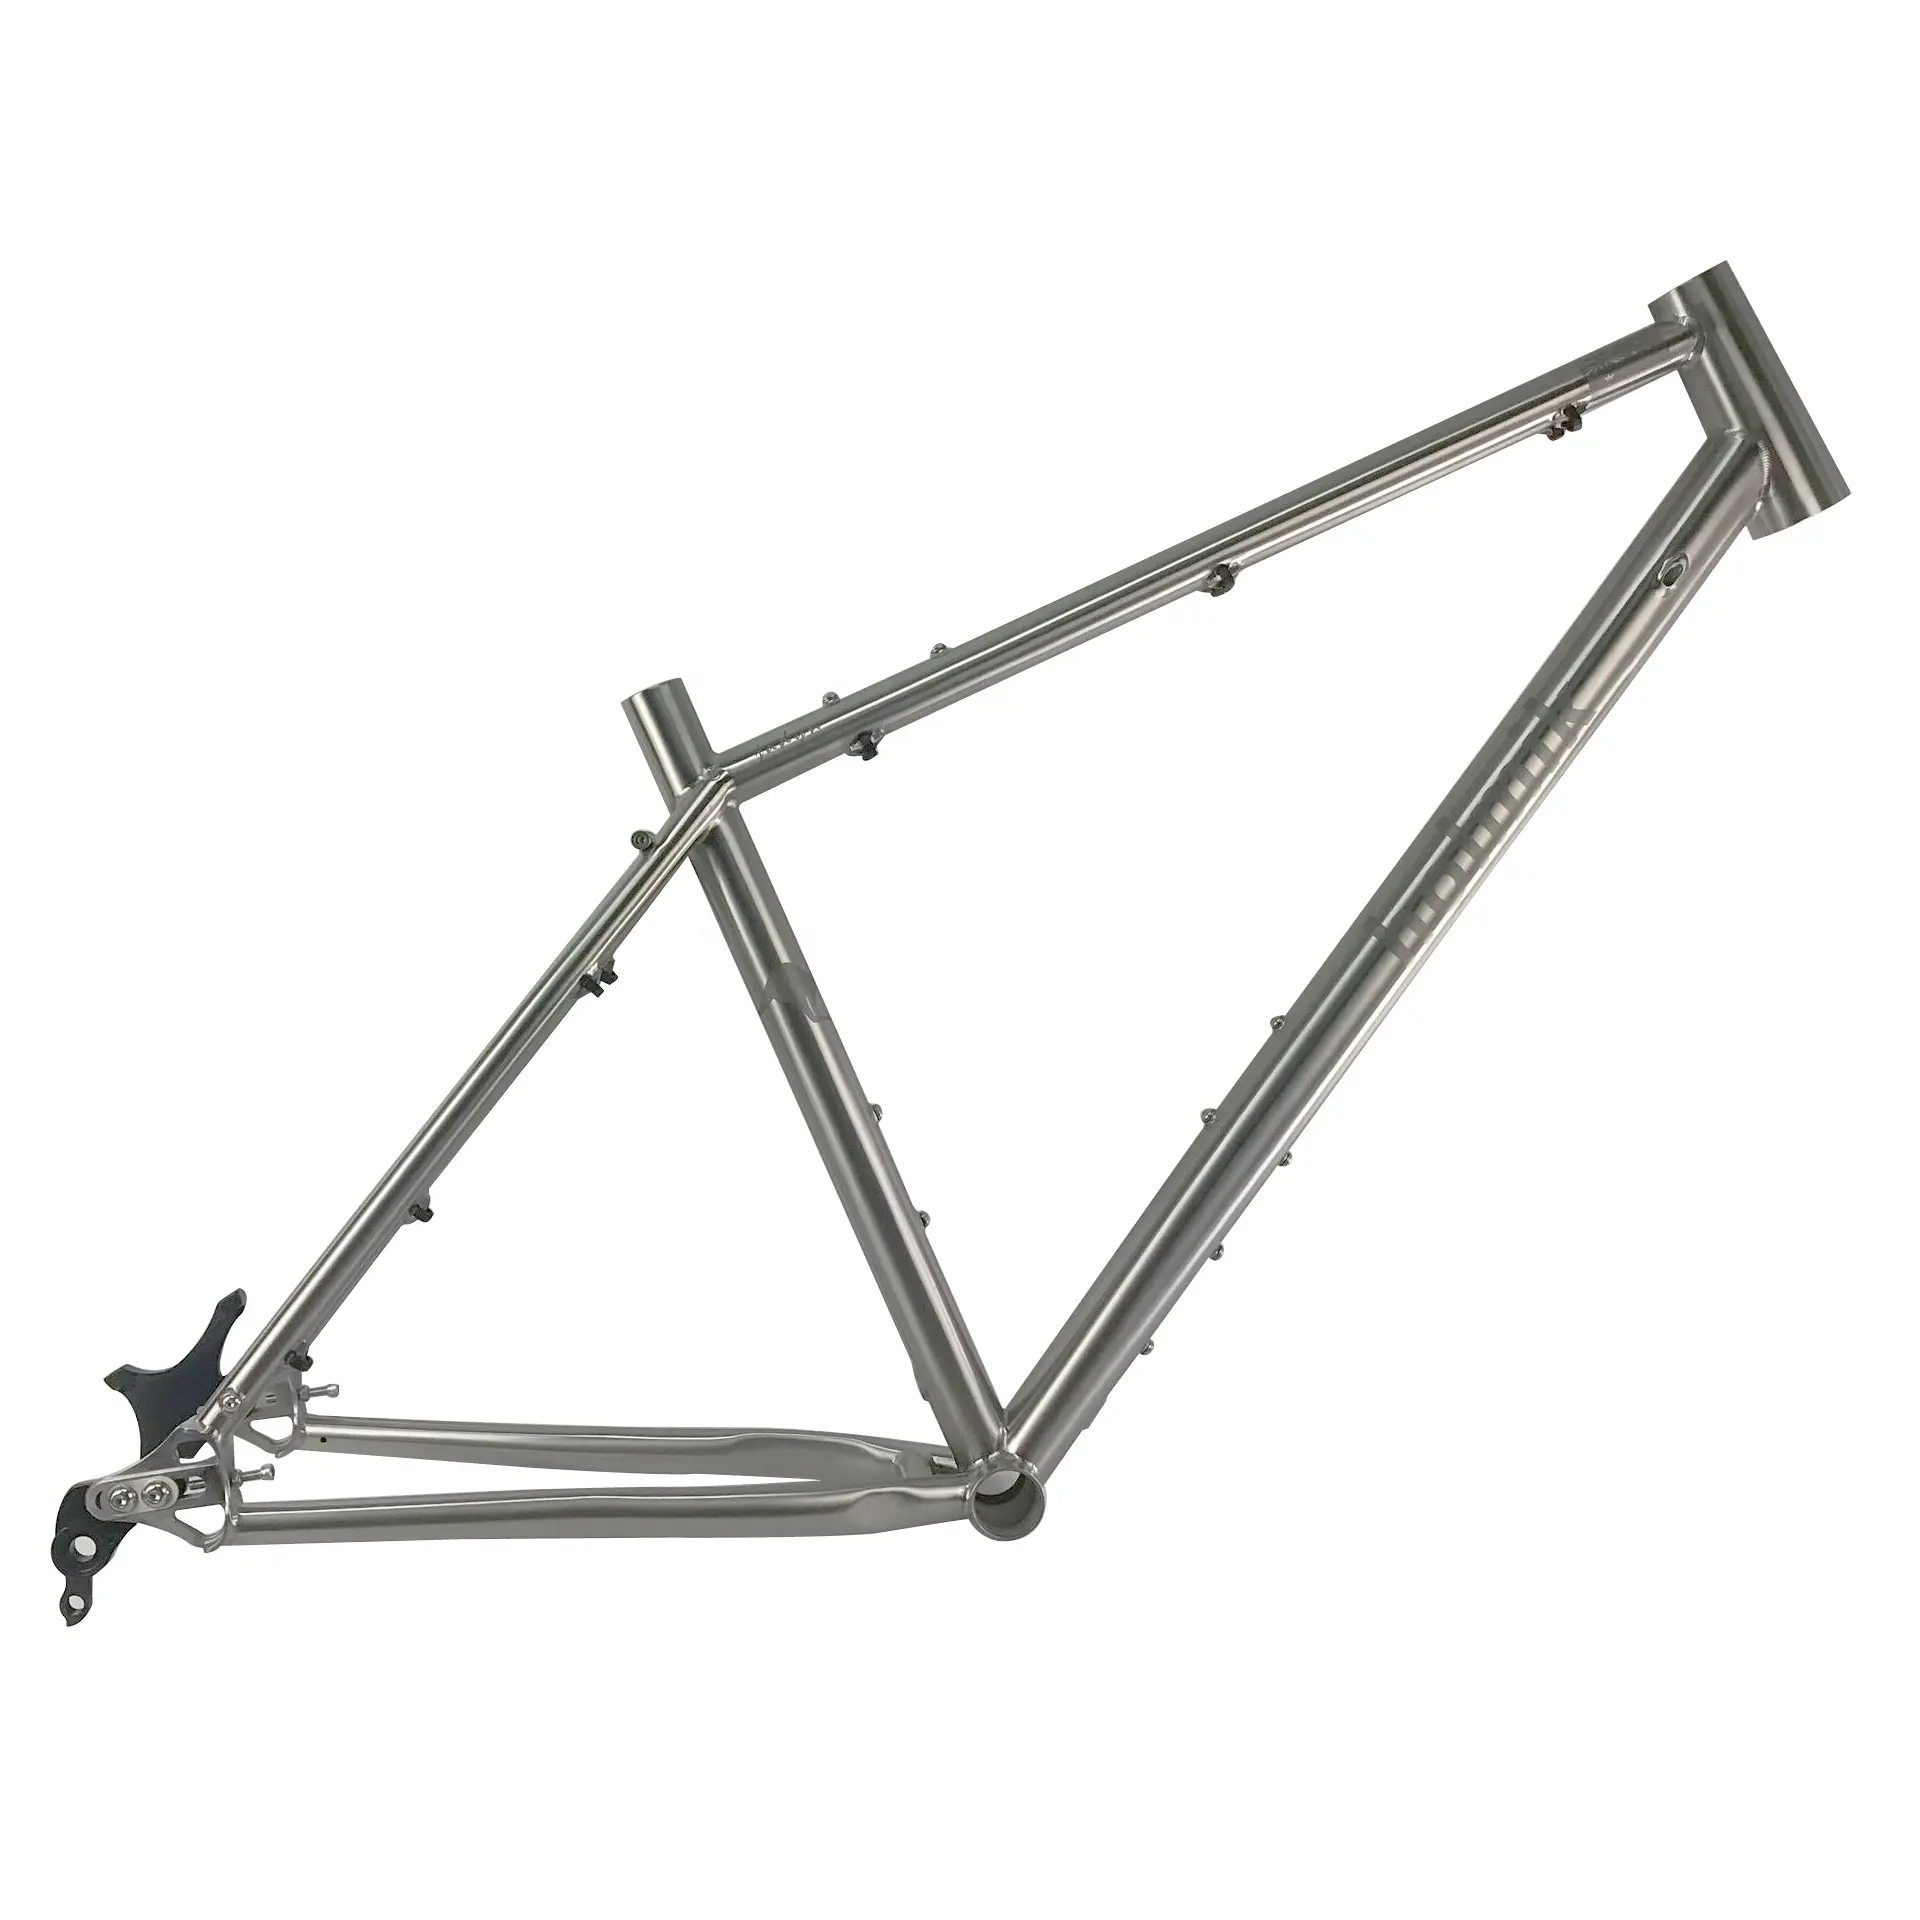 Sand balst logo 650b+ titanium mountain bike frame suspension mtb frames 27.5er fit 3.0 fat tires